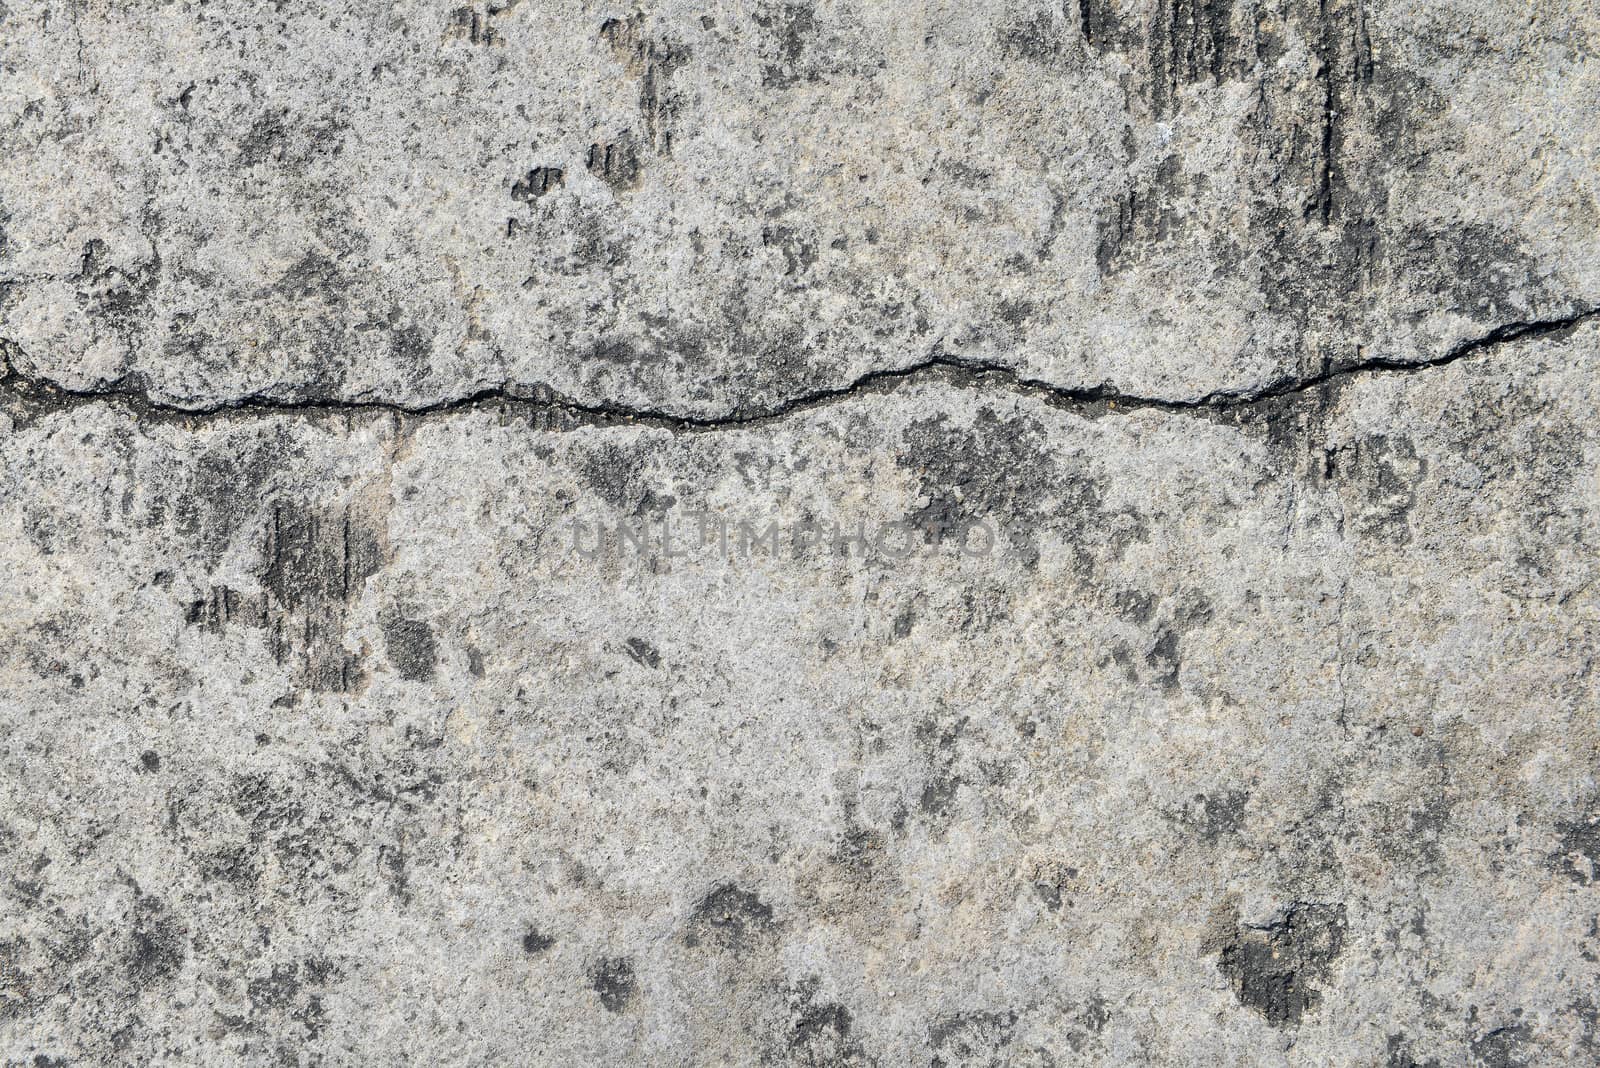 Cracked concrete texture closeup background.  by opasstudio